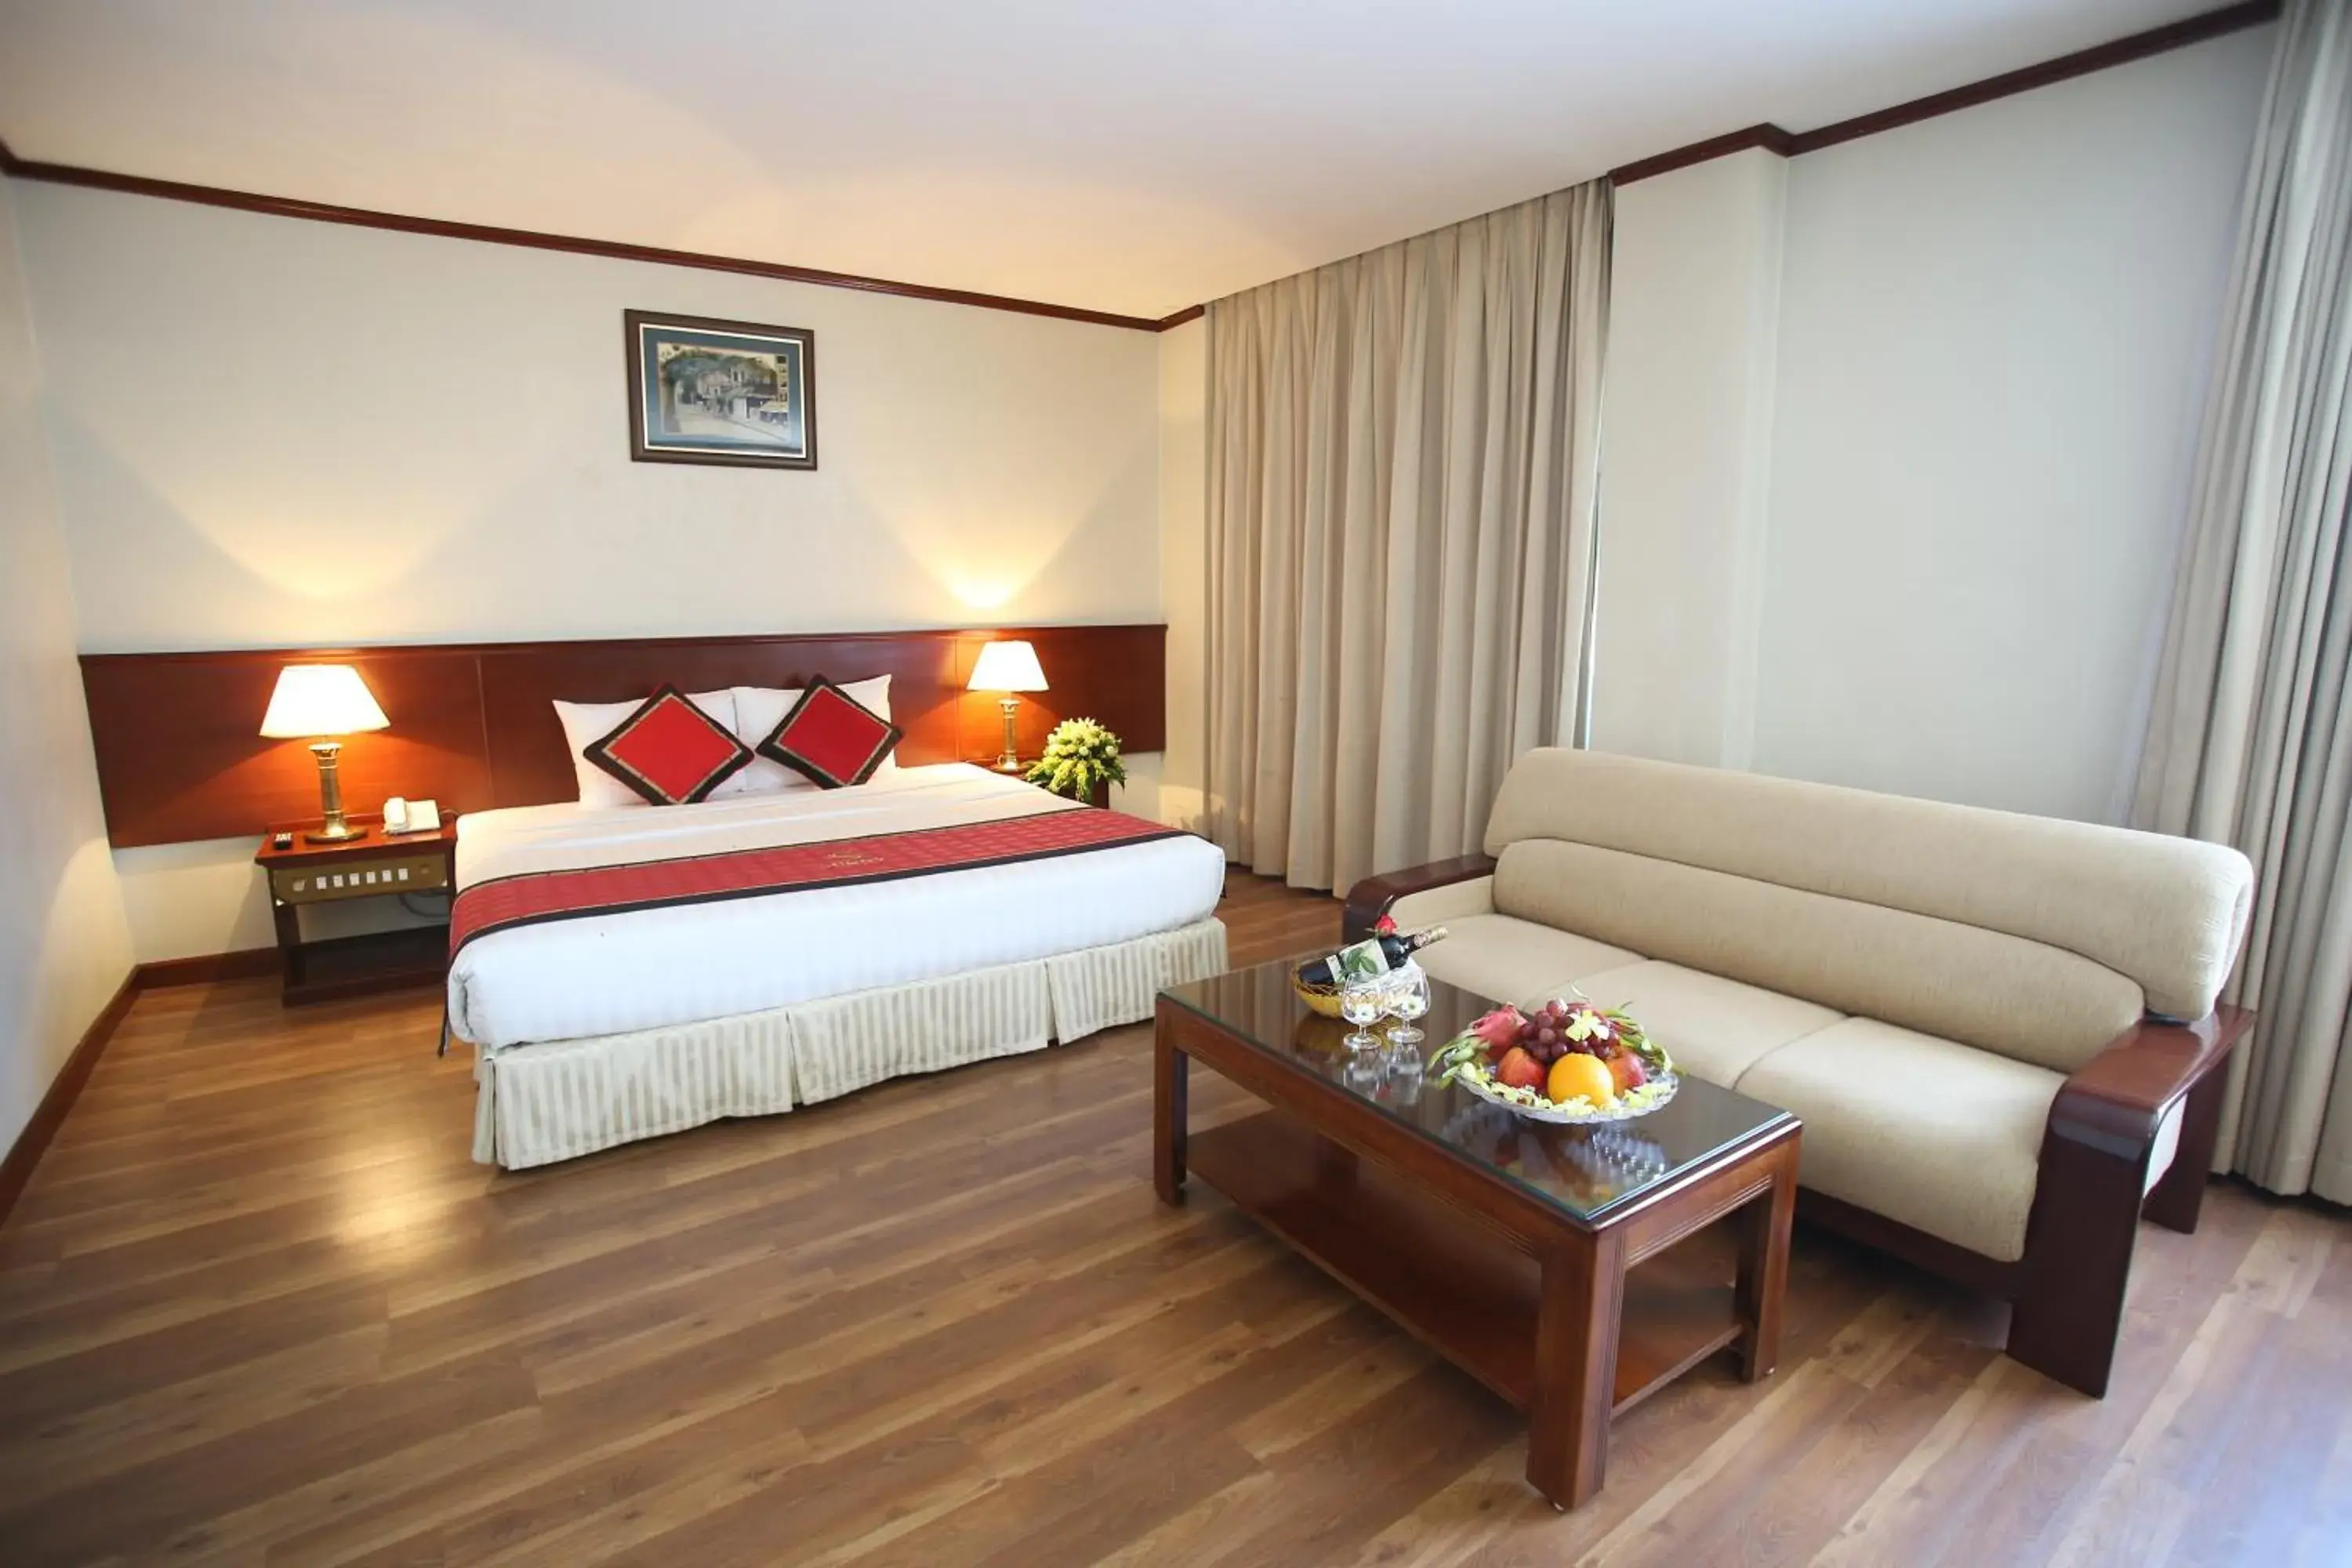 Bedroom, Room Photo in Sunny 3 Hotel